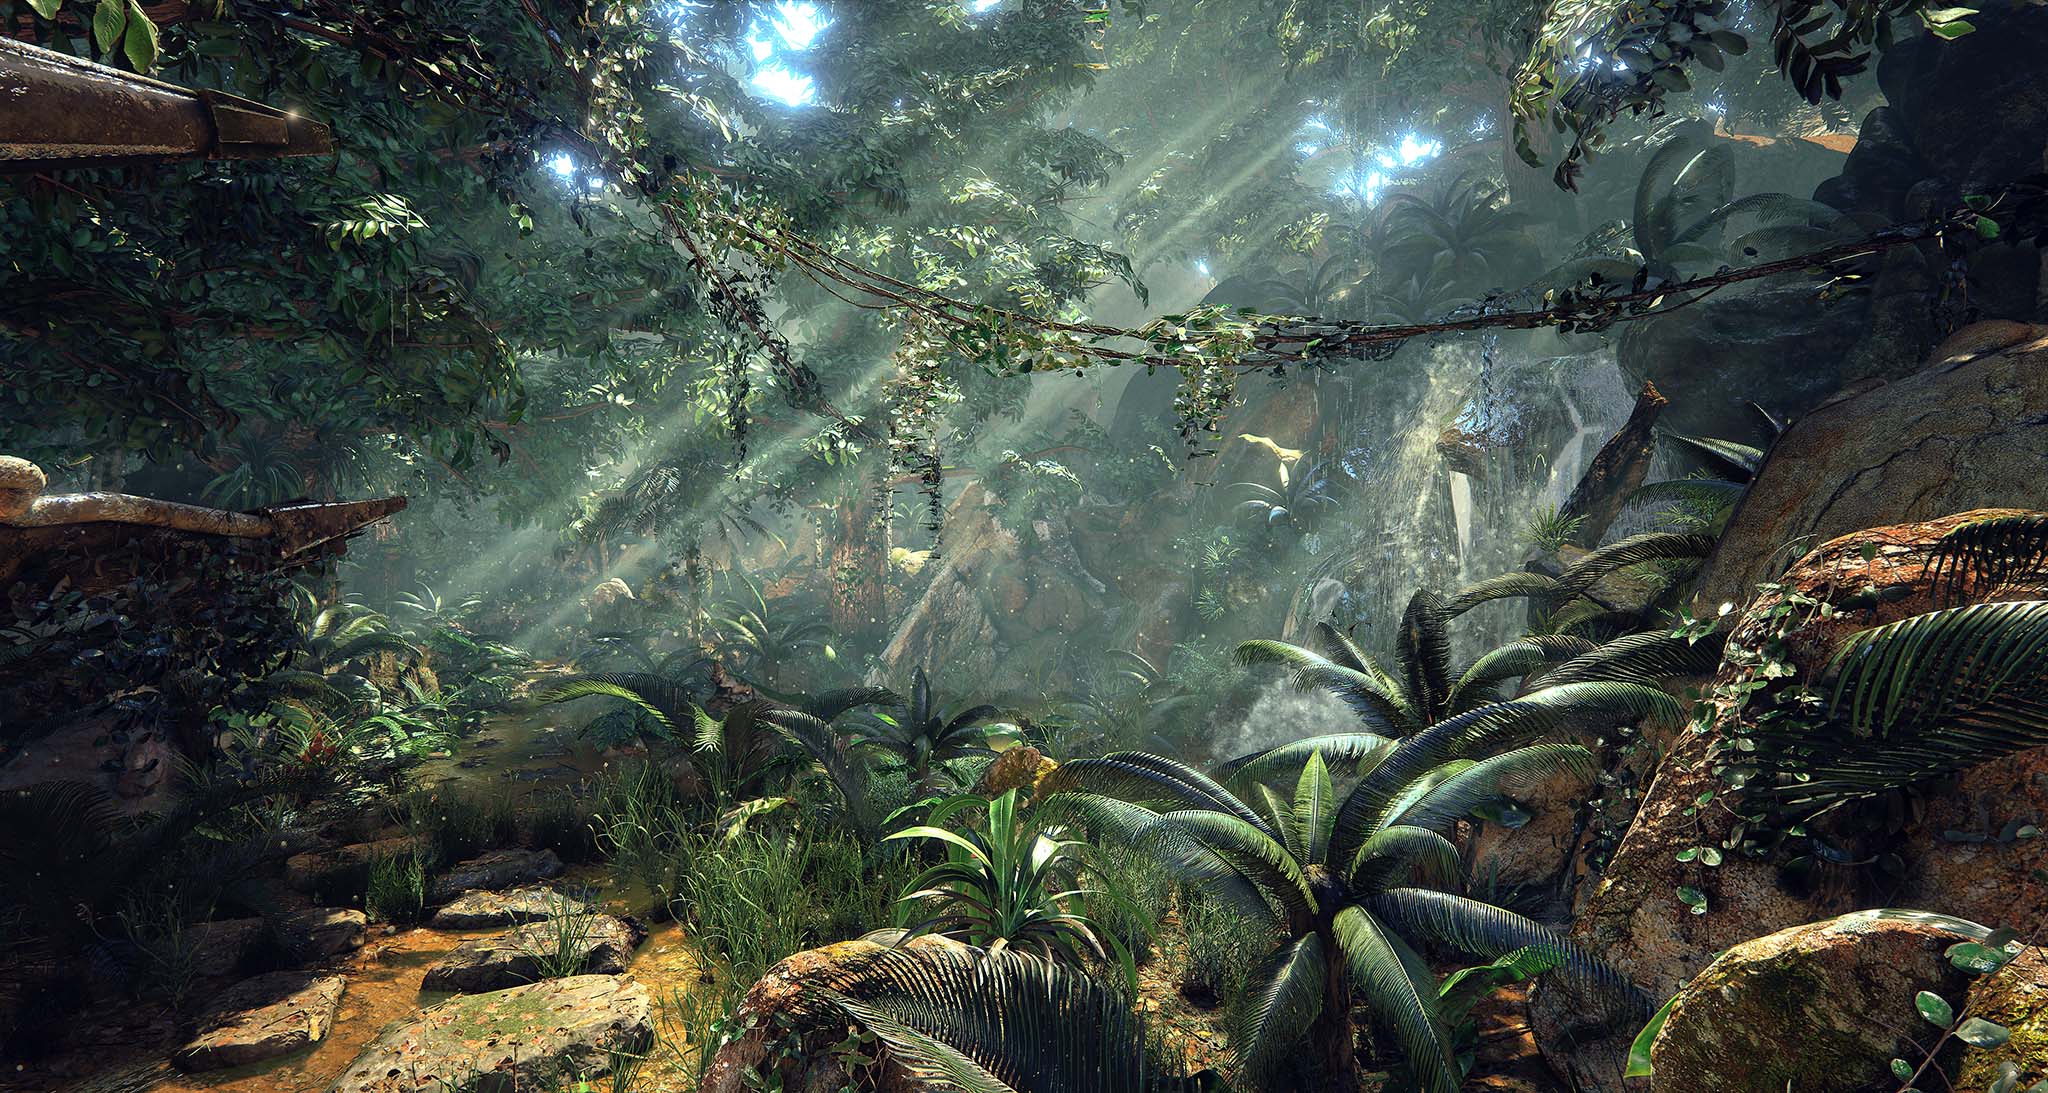 Unreal-Engine-4-Quixel’s-Jungle-Environment-6